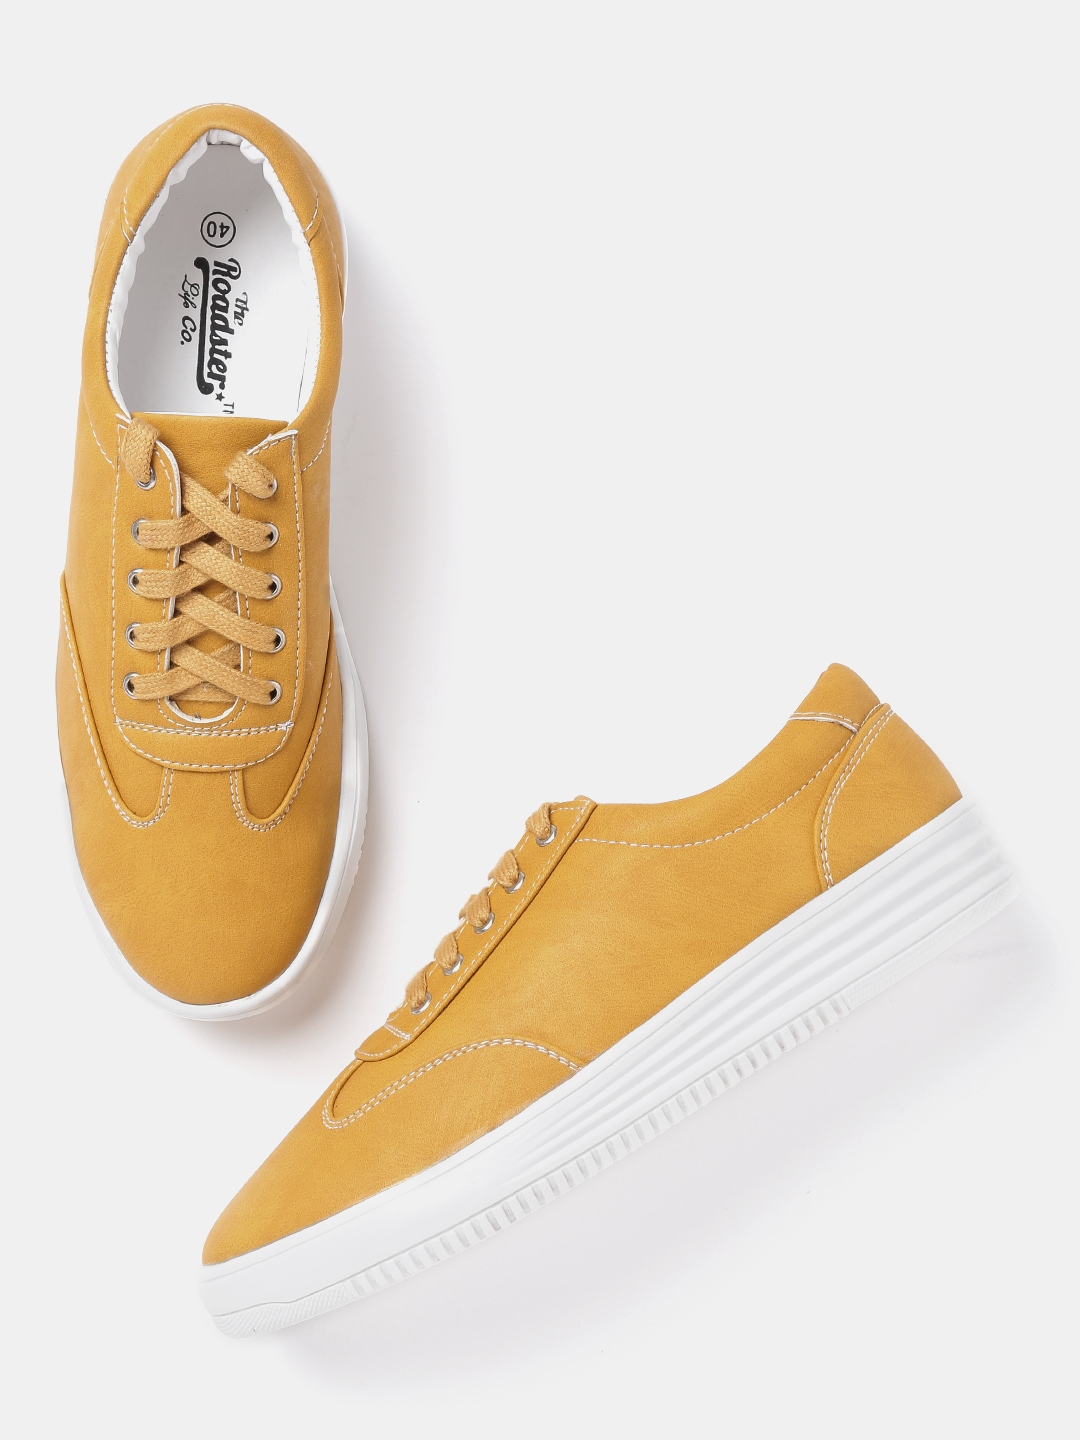 mustard yellow shoes